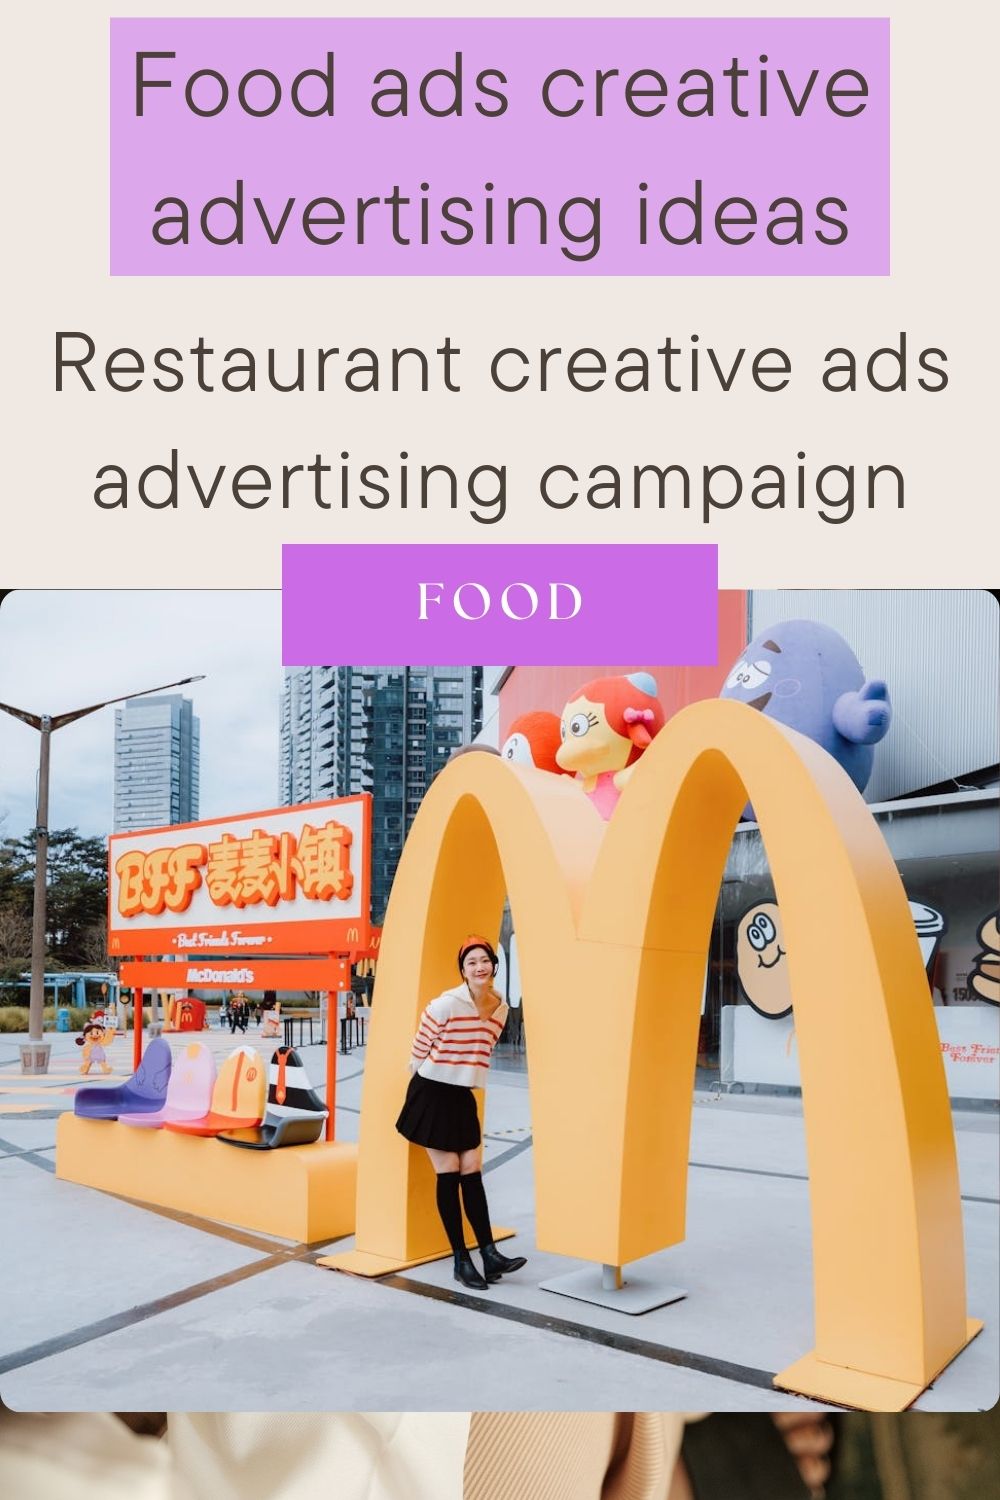 Food ads creative advertising ideas. Restaurant creative ads advertising campaign